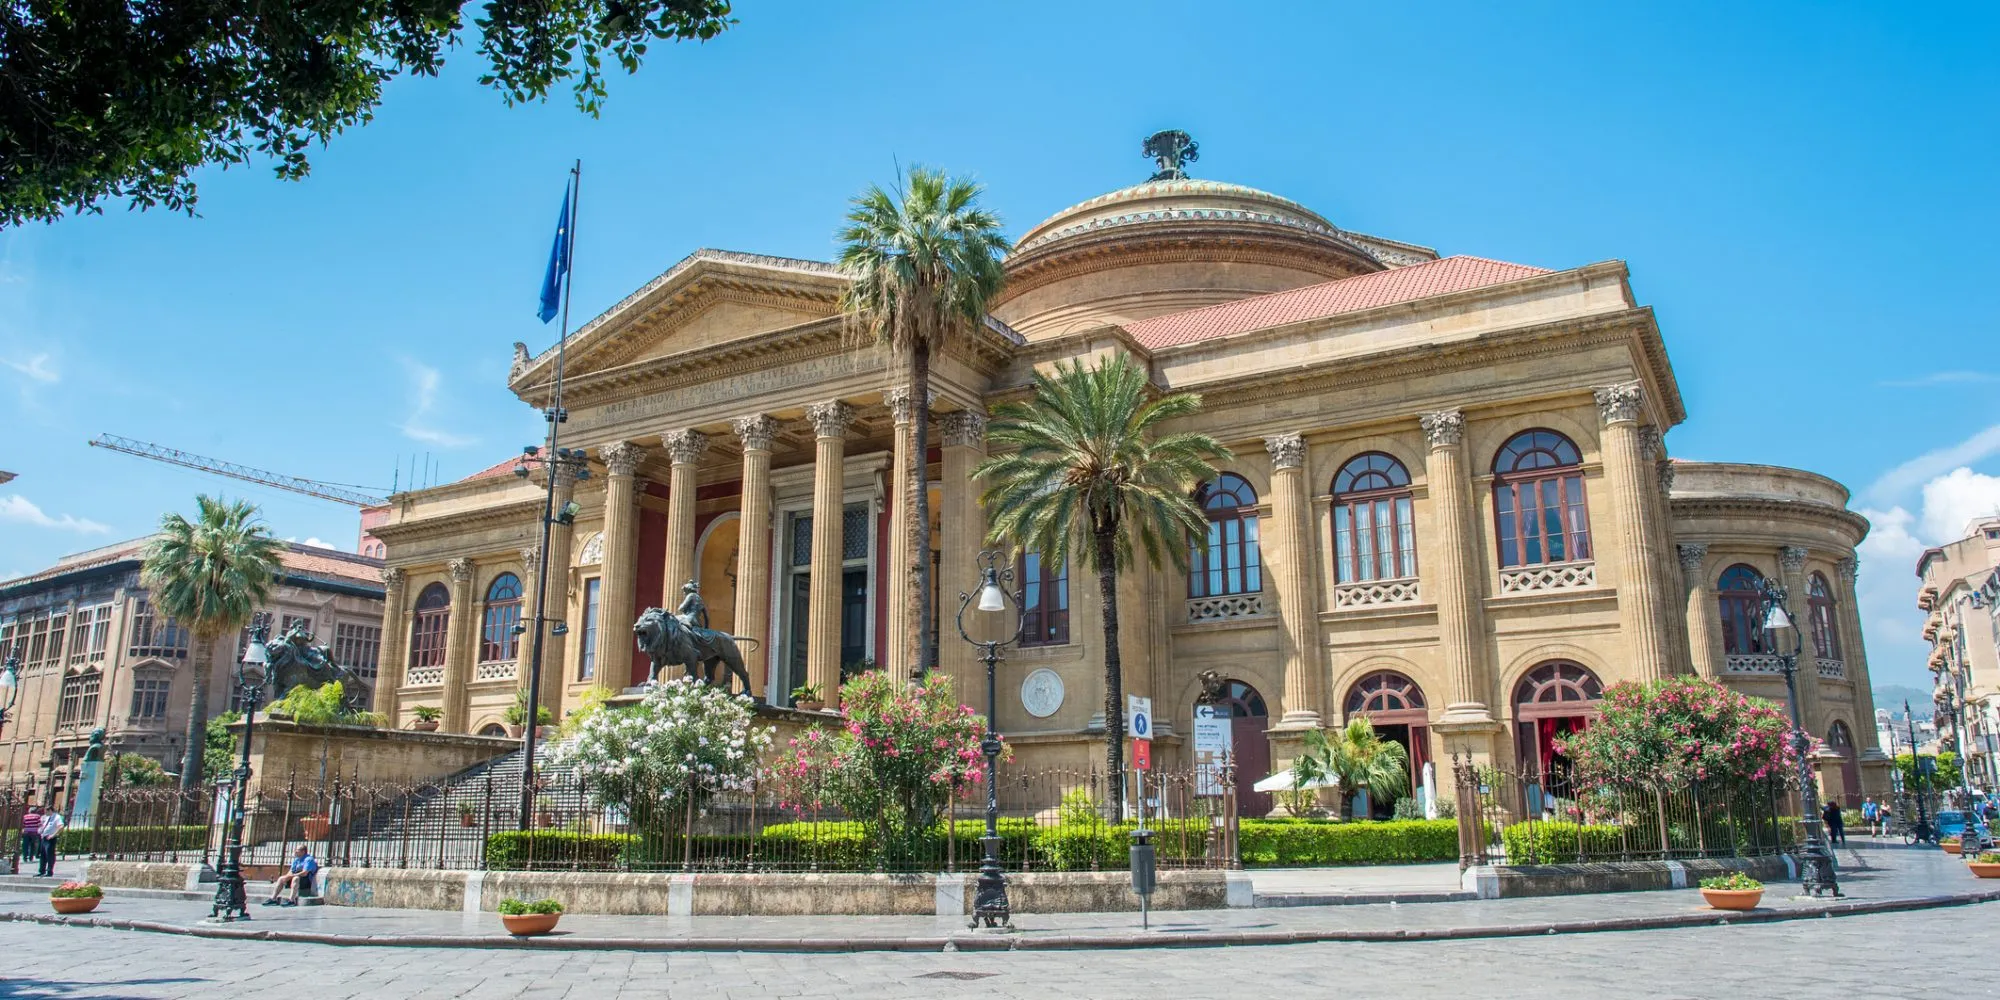 Palermo Opera House